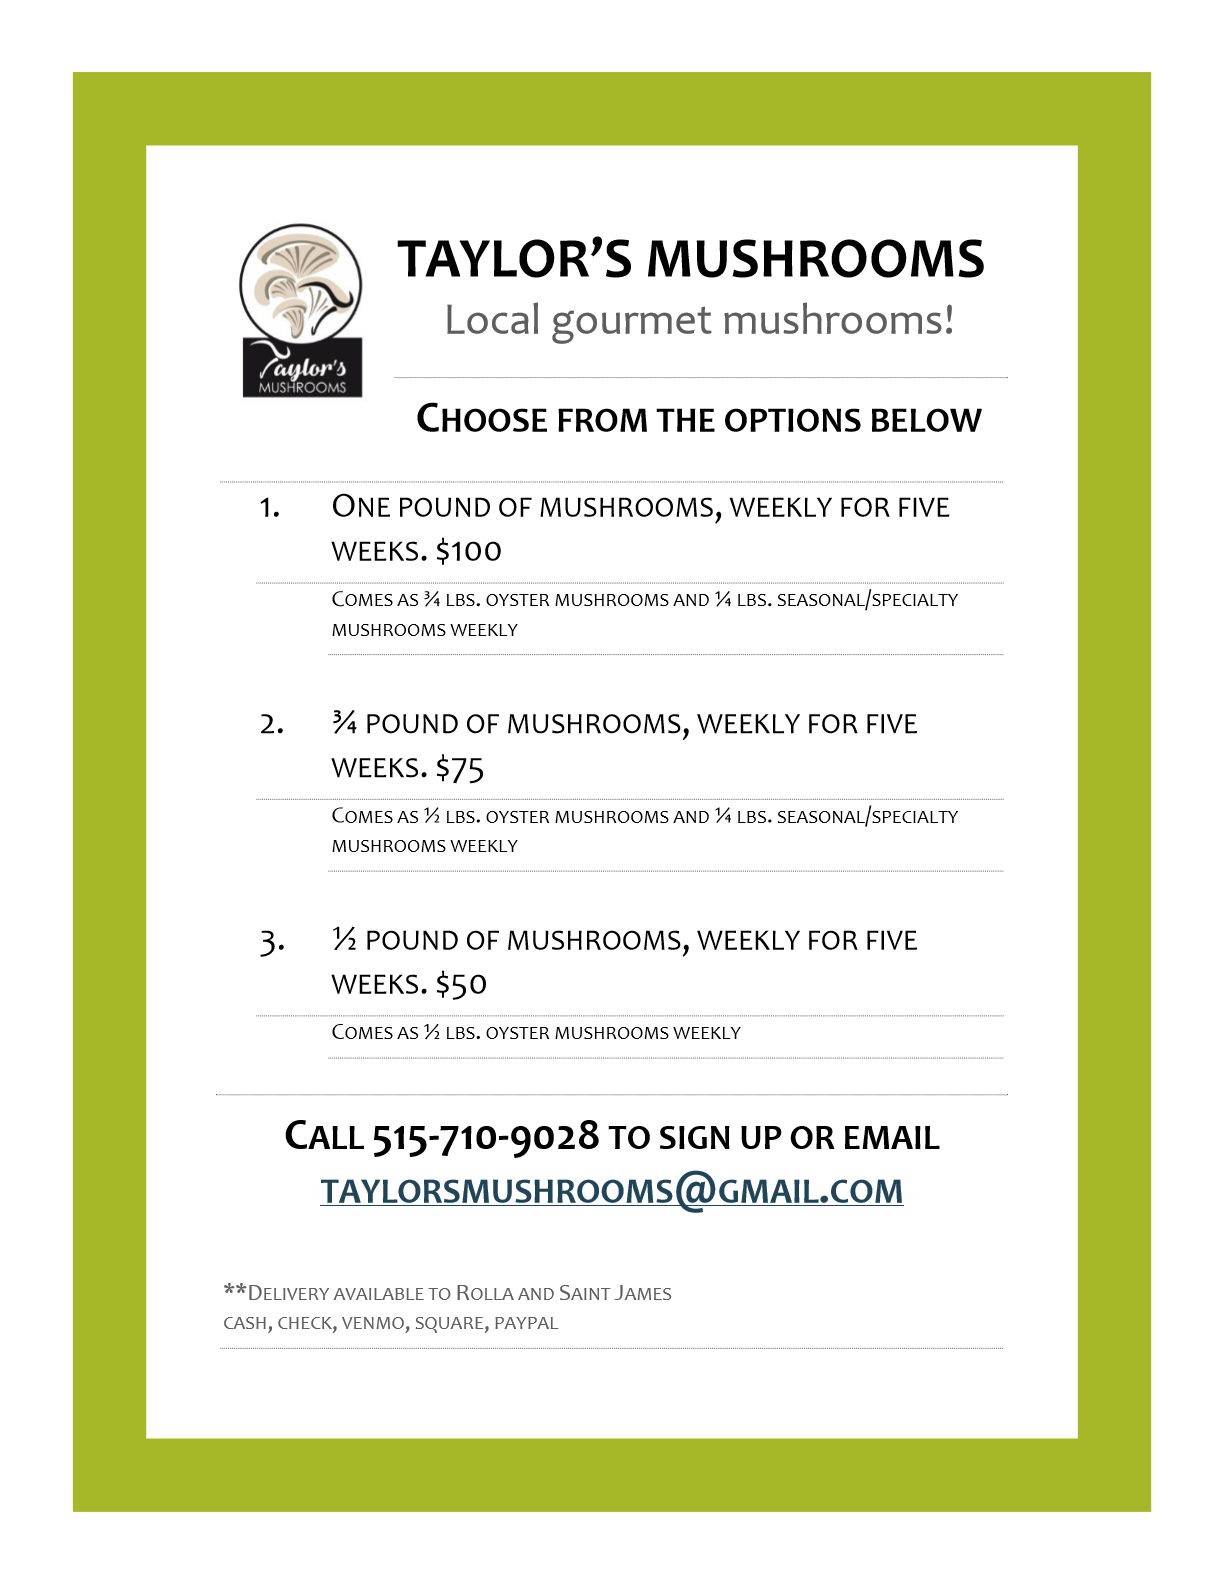 Mushroom Delivery - Option 3